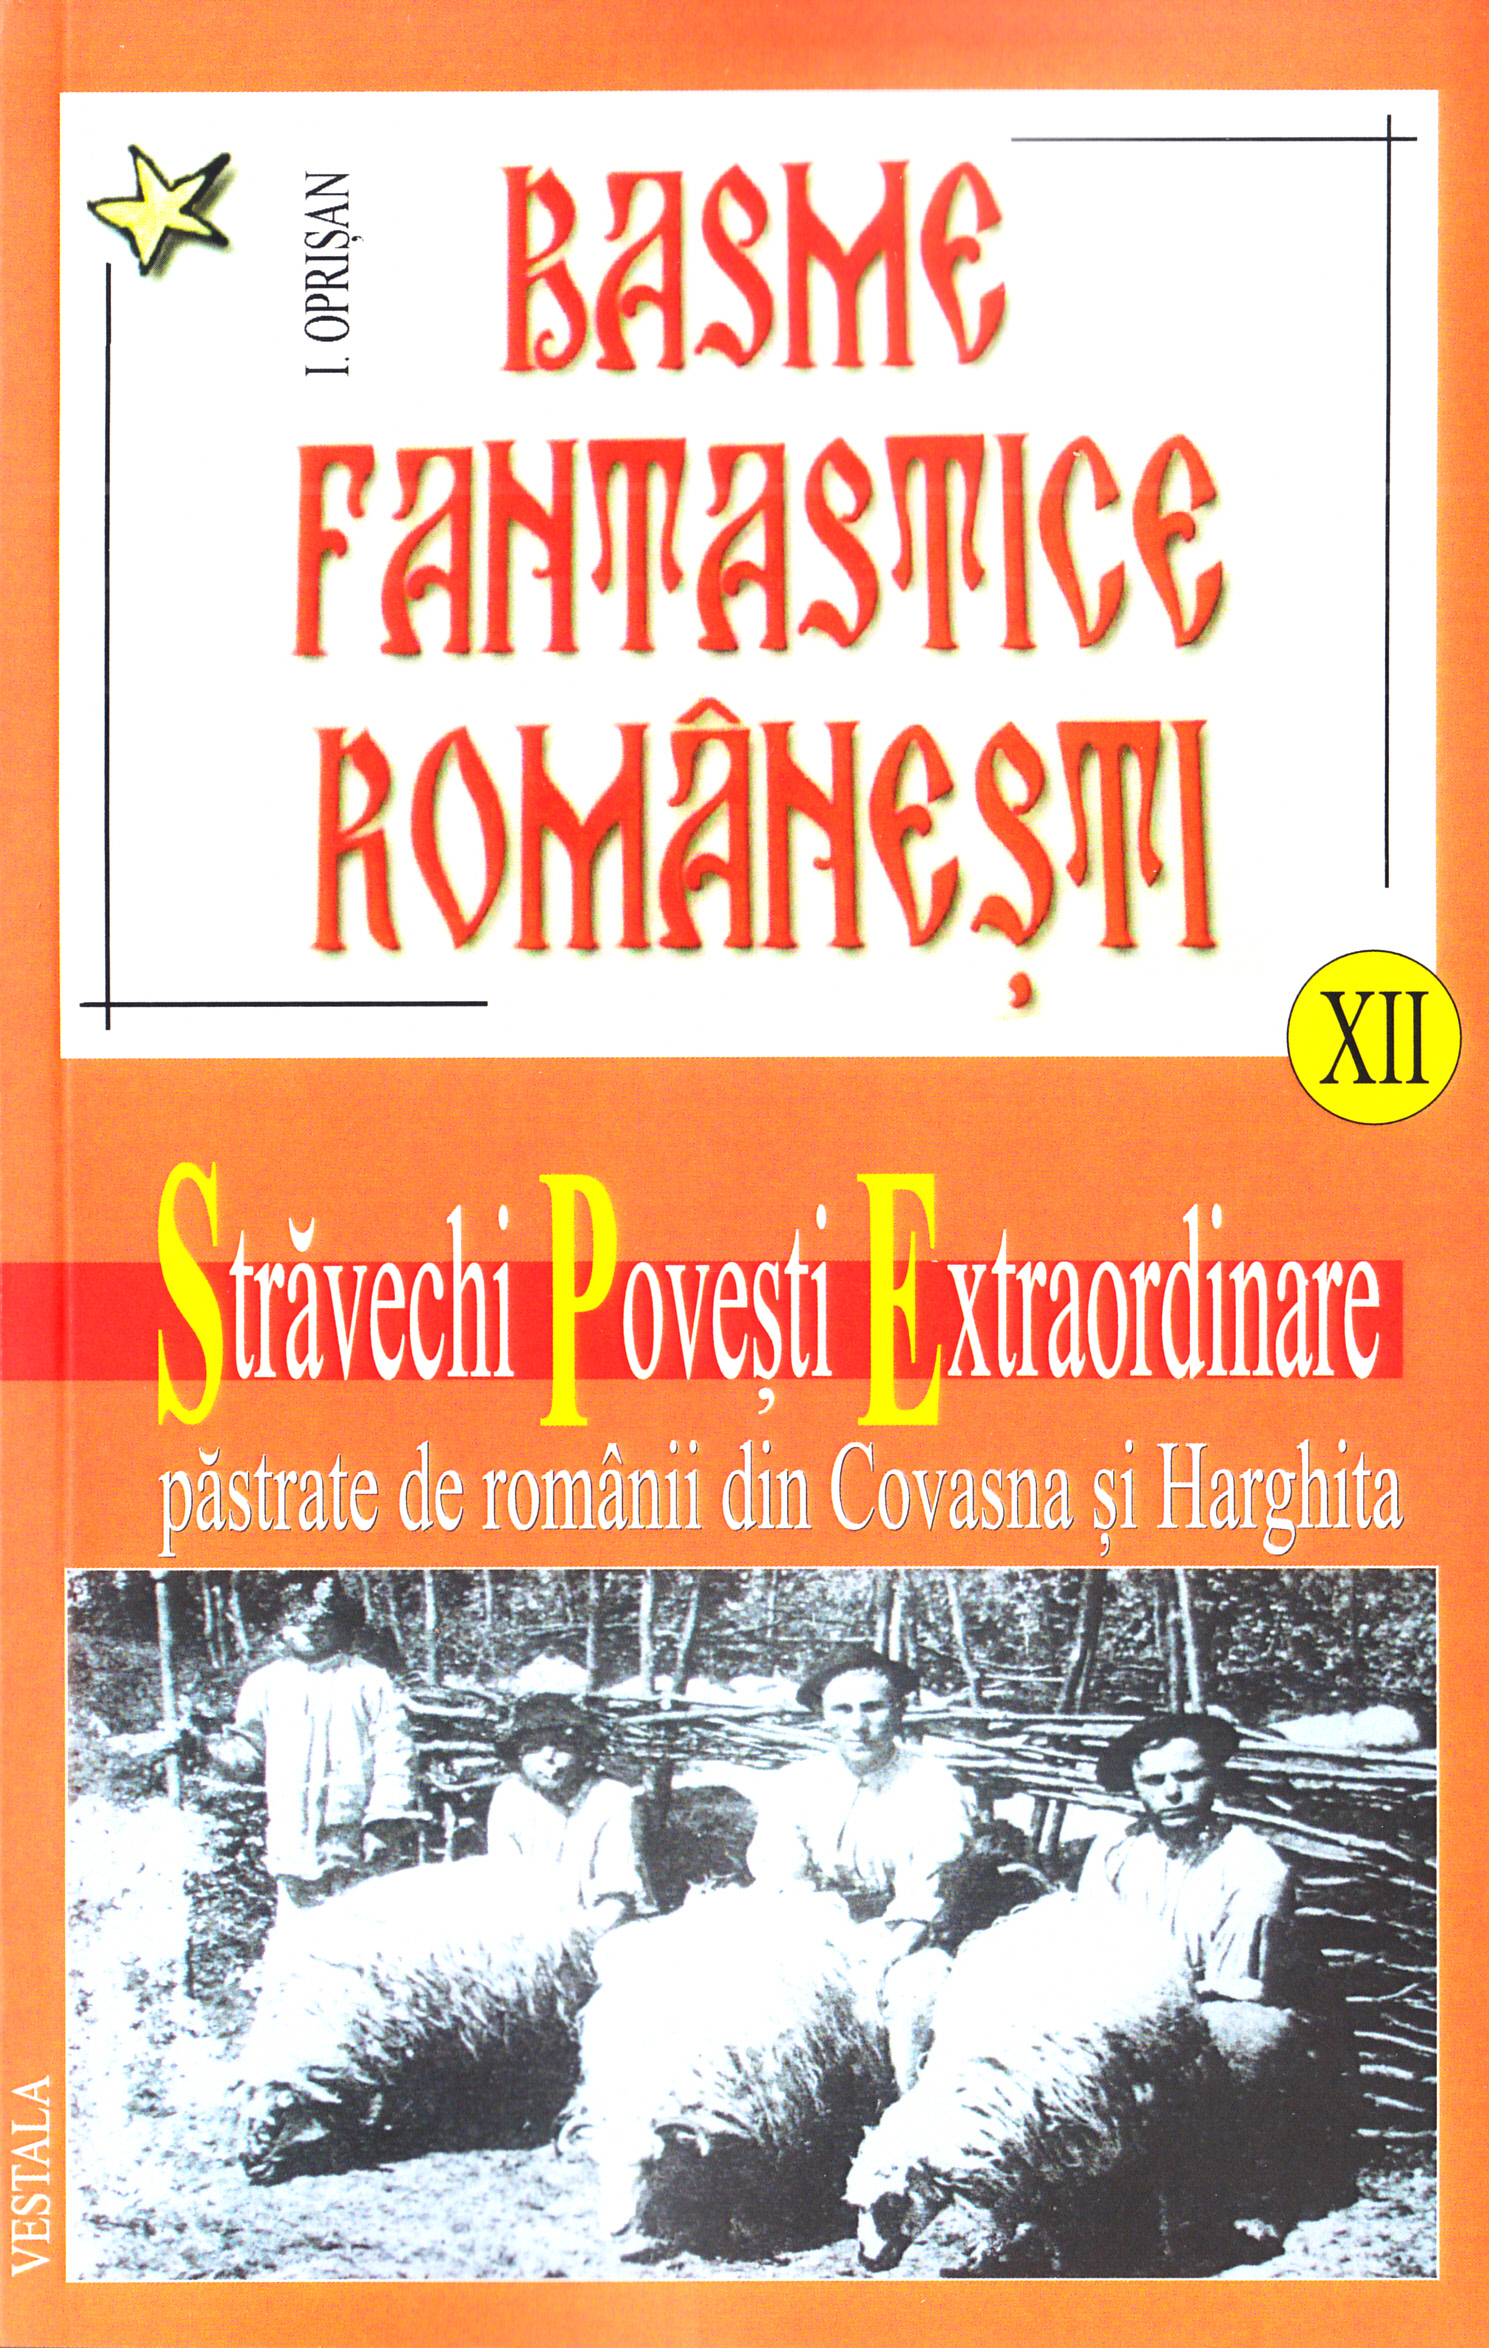 Basme fantastice romanesti XII - I. Oprisan